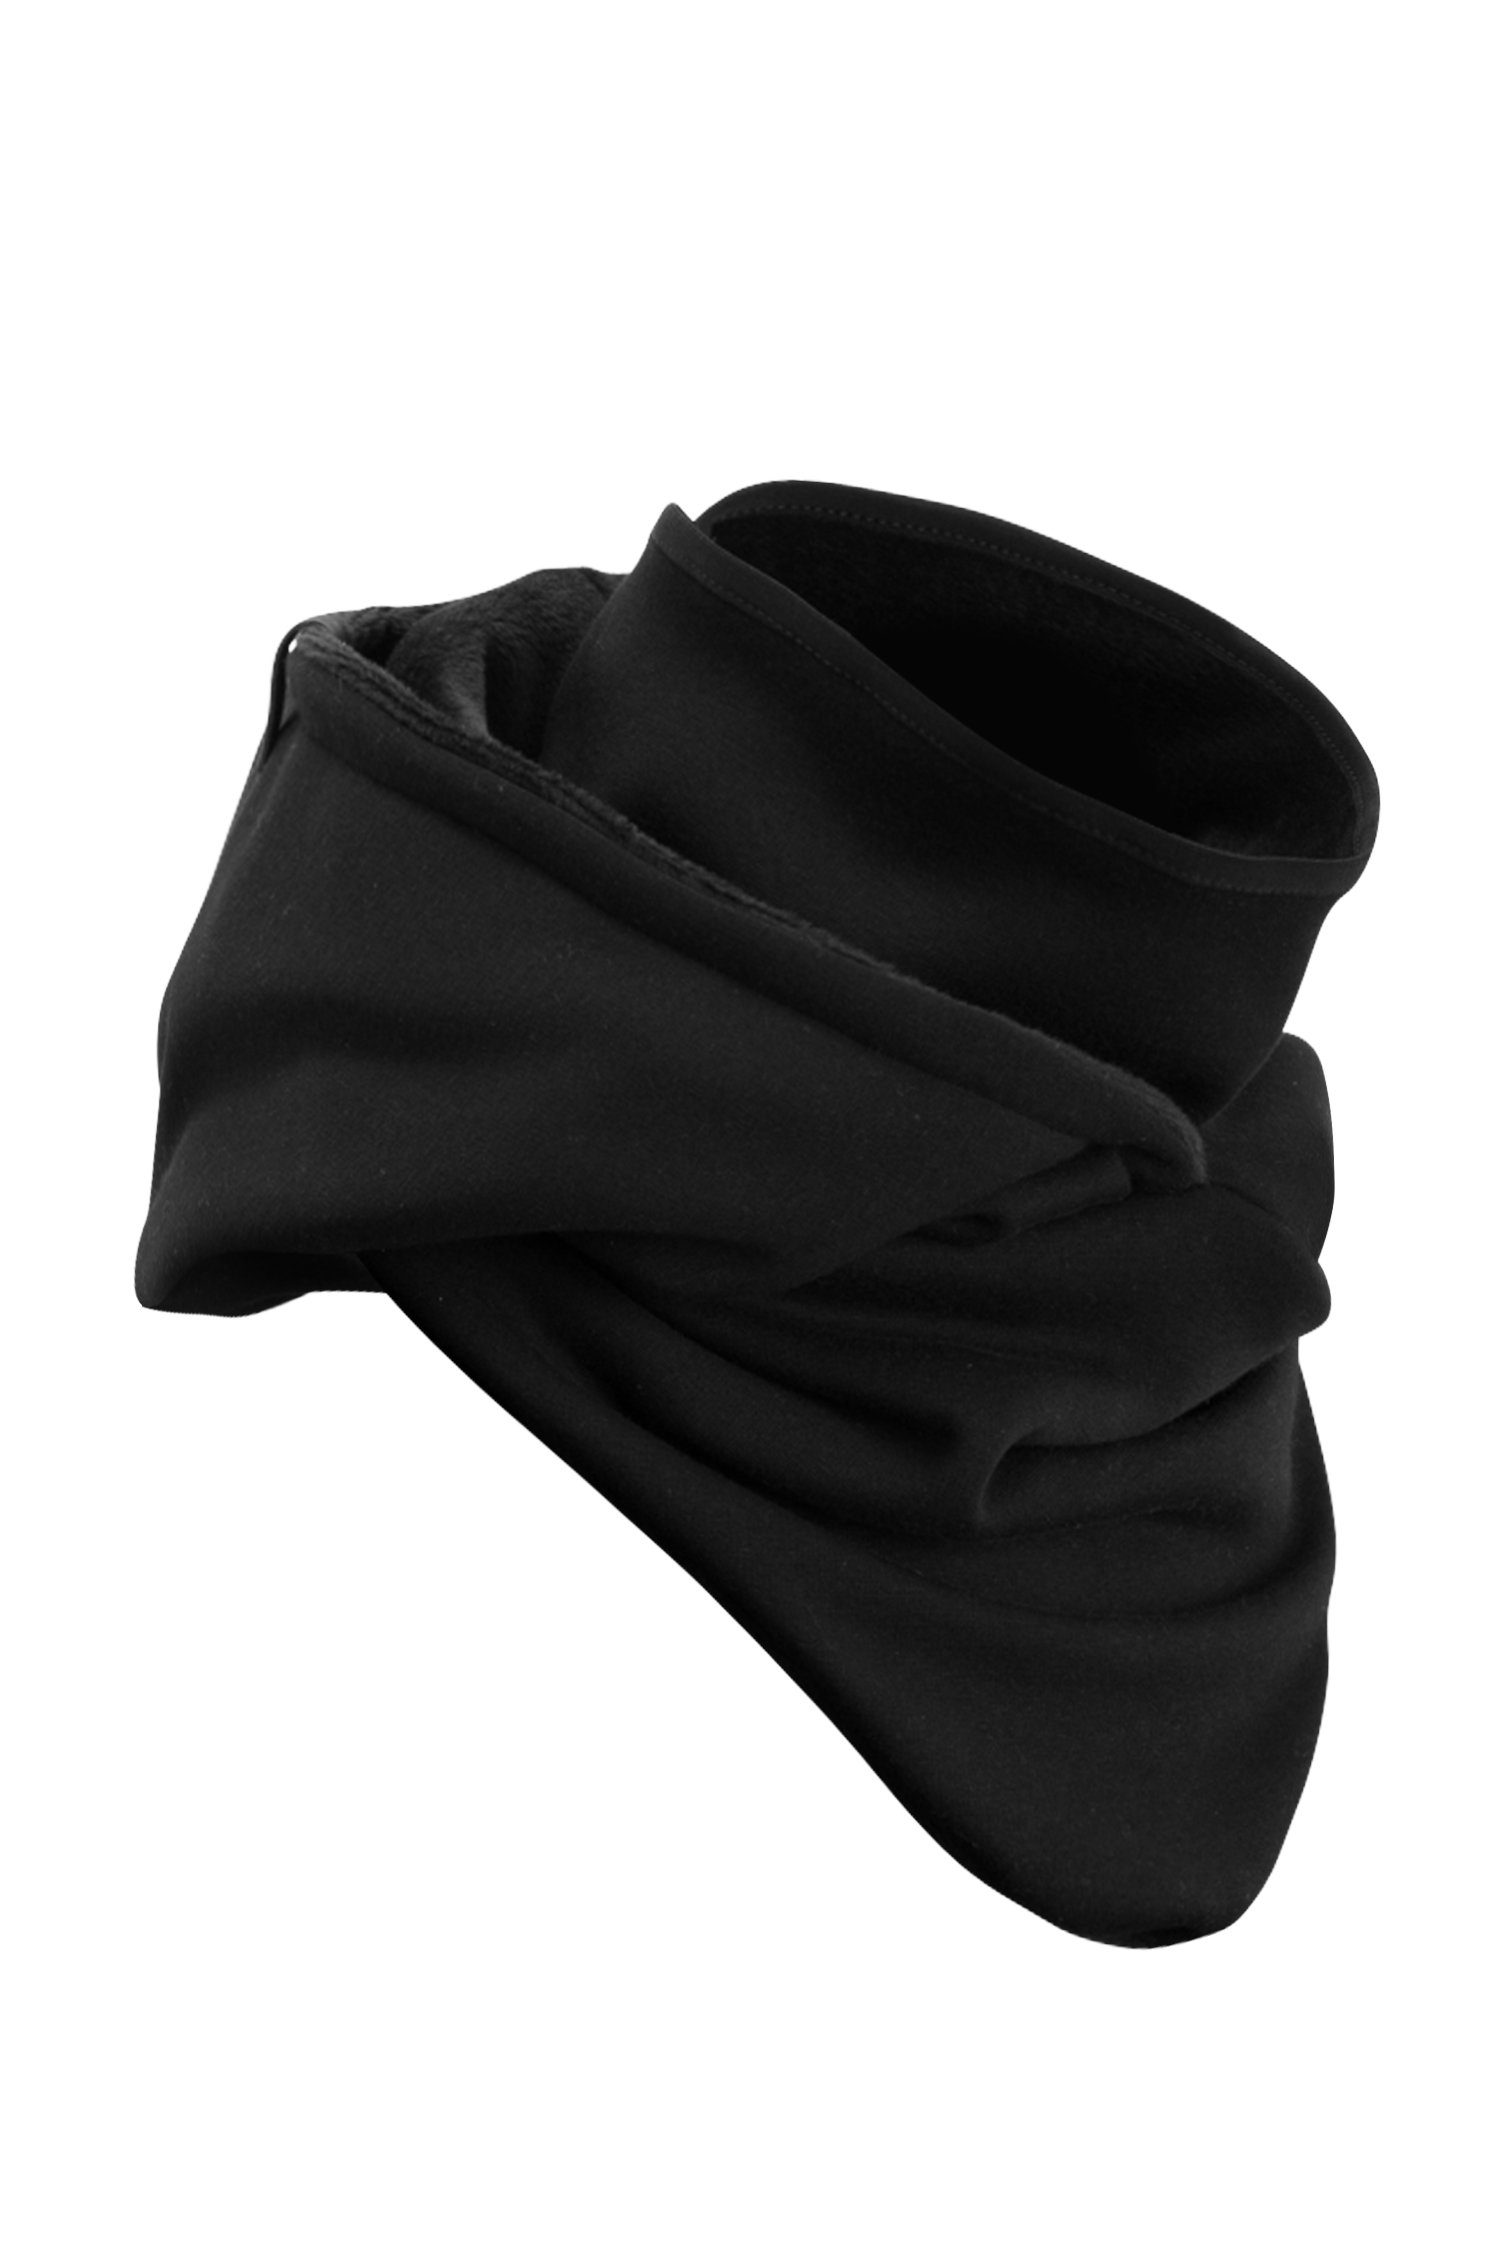 Manufaktur13 Schal Out aus Windbreaker Loop Hooded Kapuzenschal, integriertem Alpenfleece, - Black mit Schal